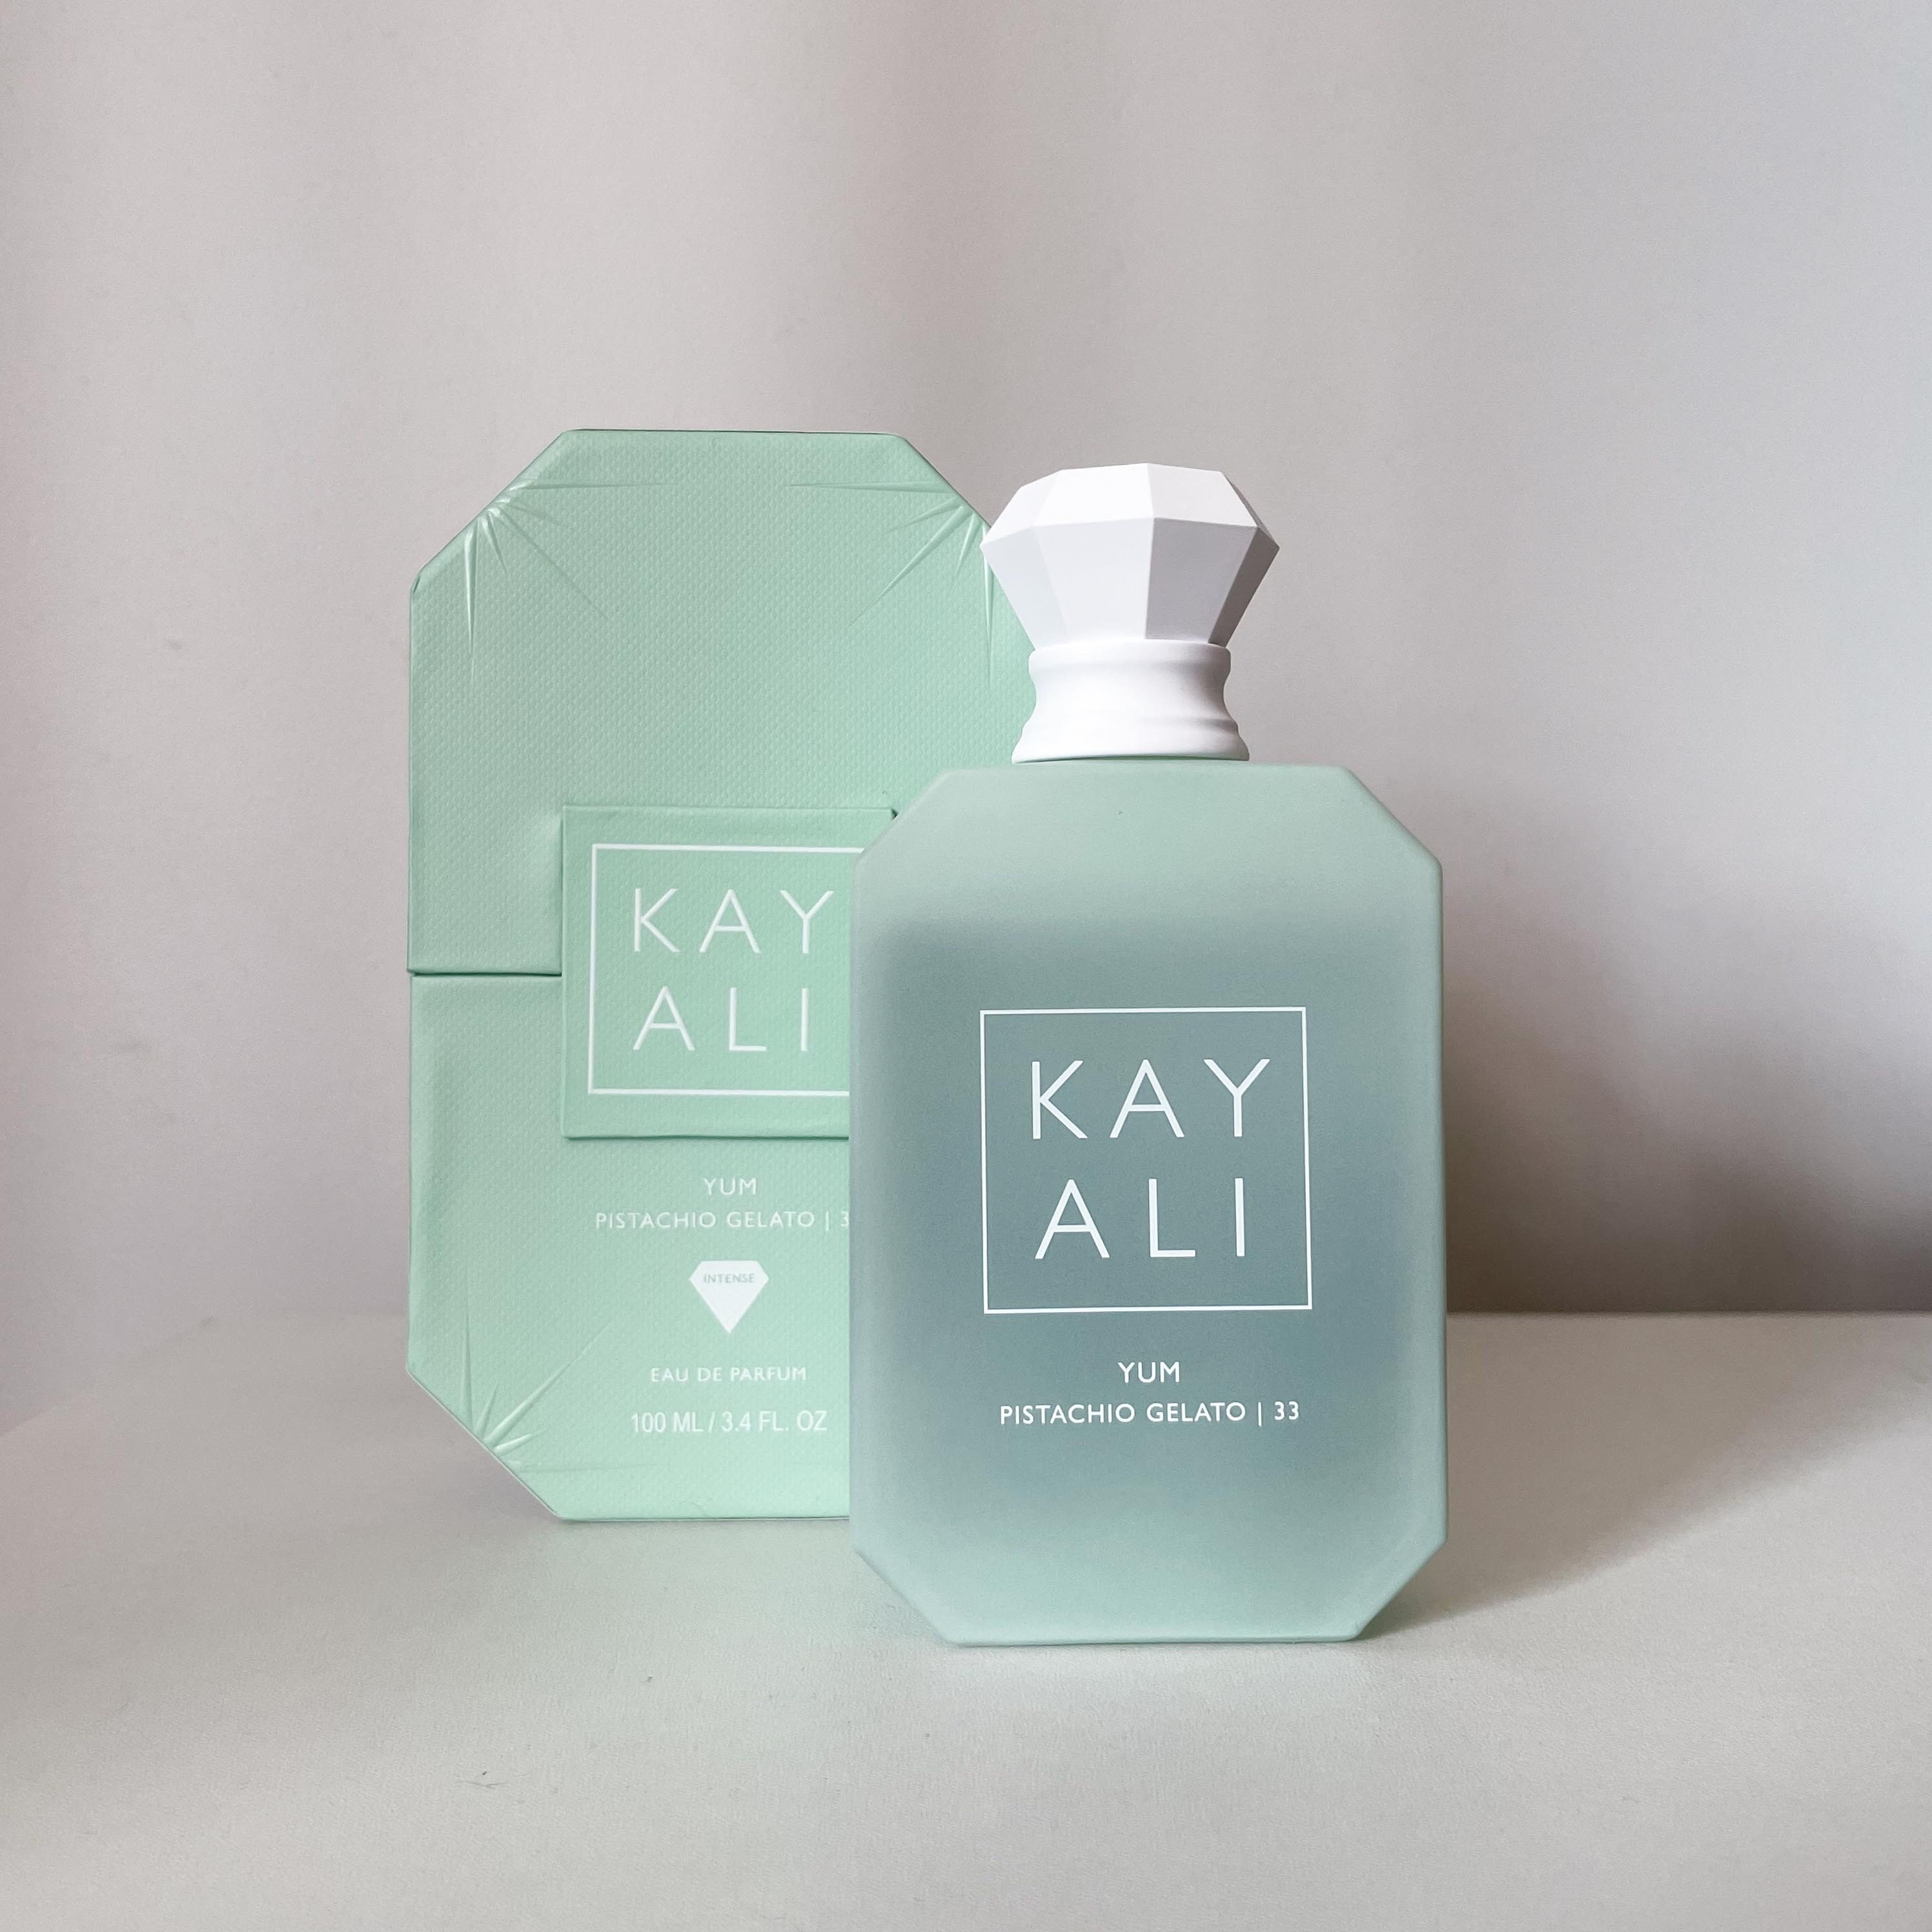 Kayali Yum Pistachio Gelato 33 DECANTER Perfume Huda Beauty -  Israel